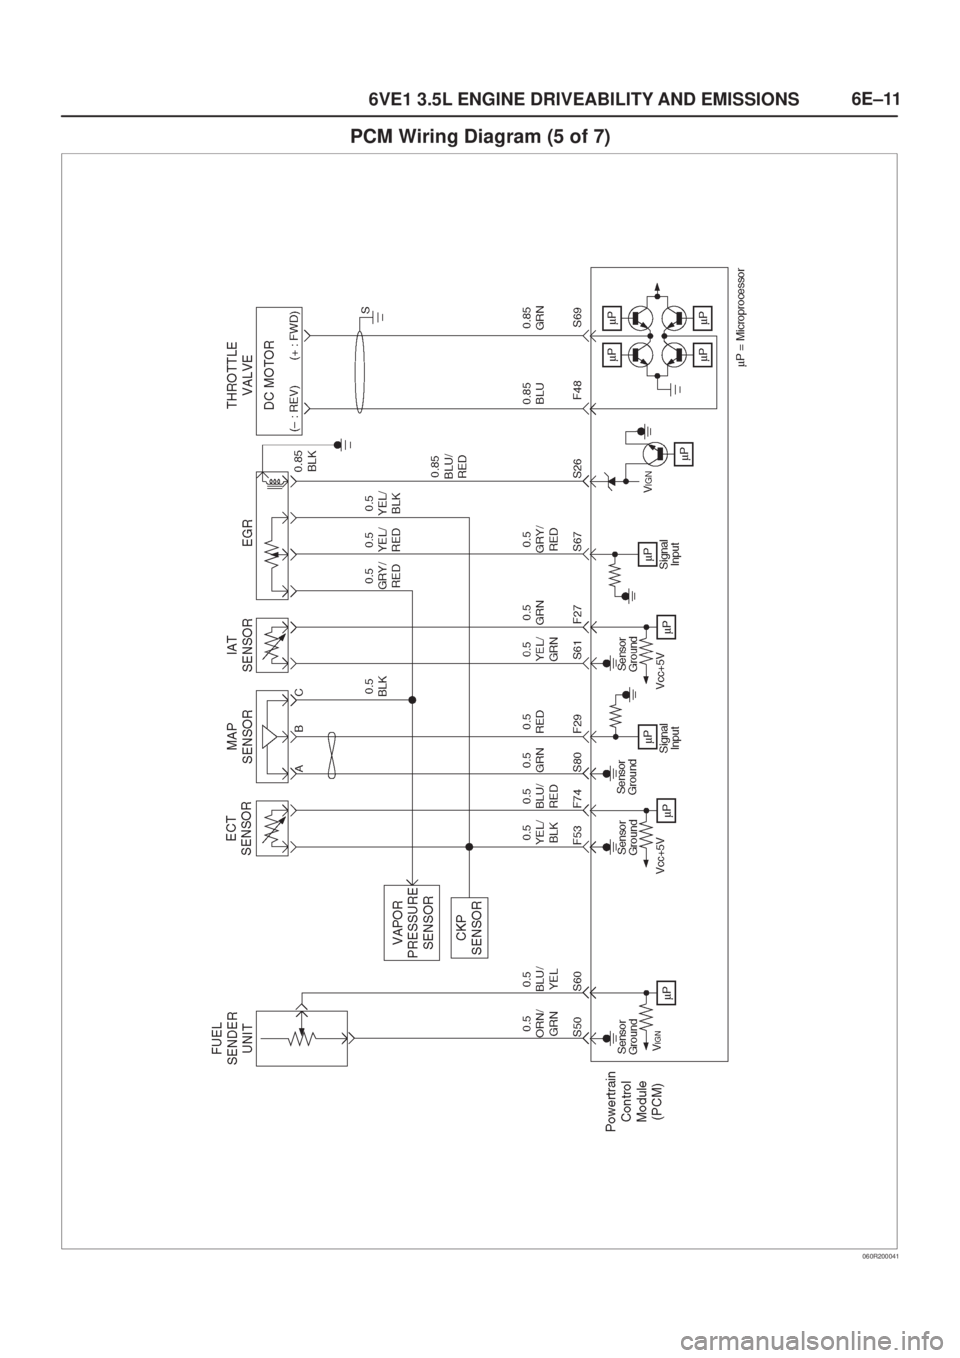 ISUZU AXIOM 2002  Service Repair Manual 6E±11
6VE1 3.5L ENGINE DRIVEABILITY AND EMISSIONS
PCM Wiring Diagram (5 of 7)
060R200041 